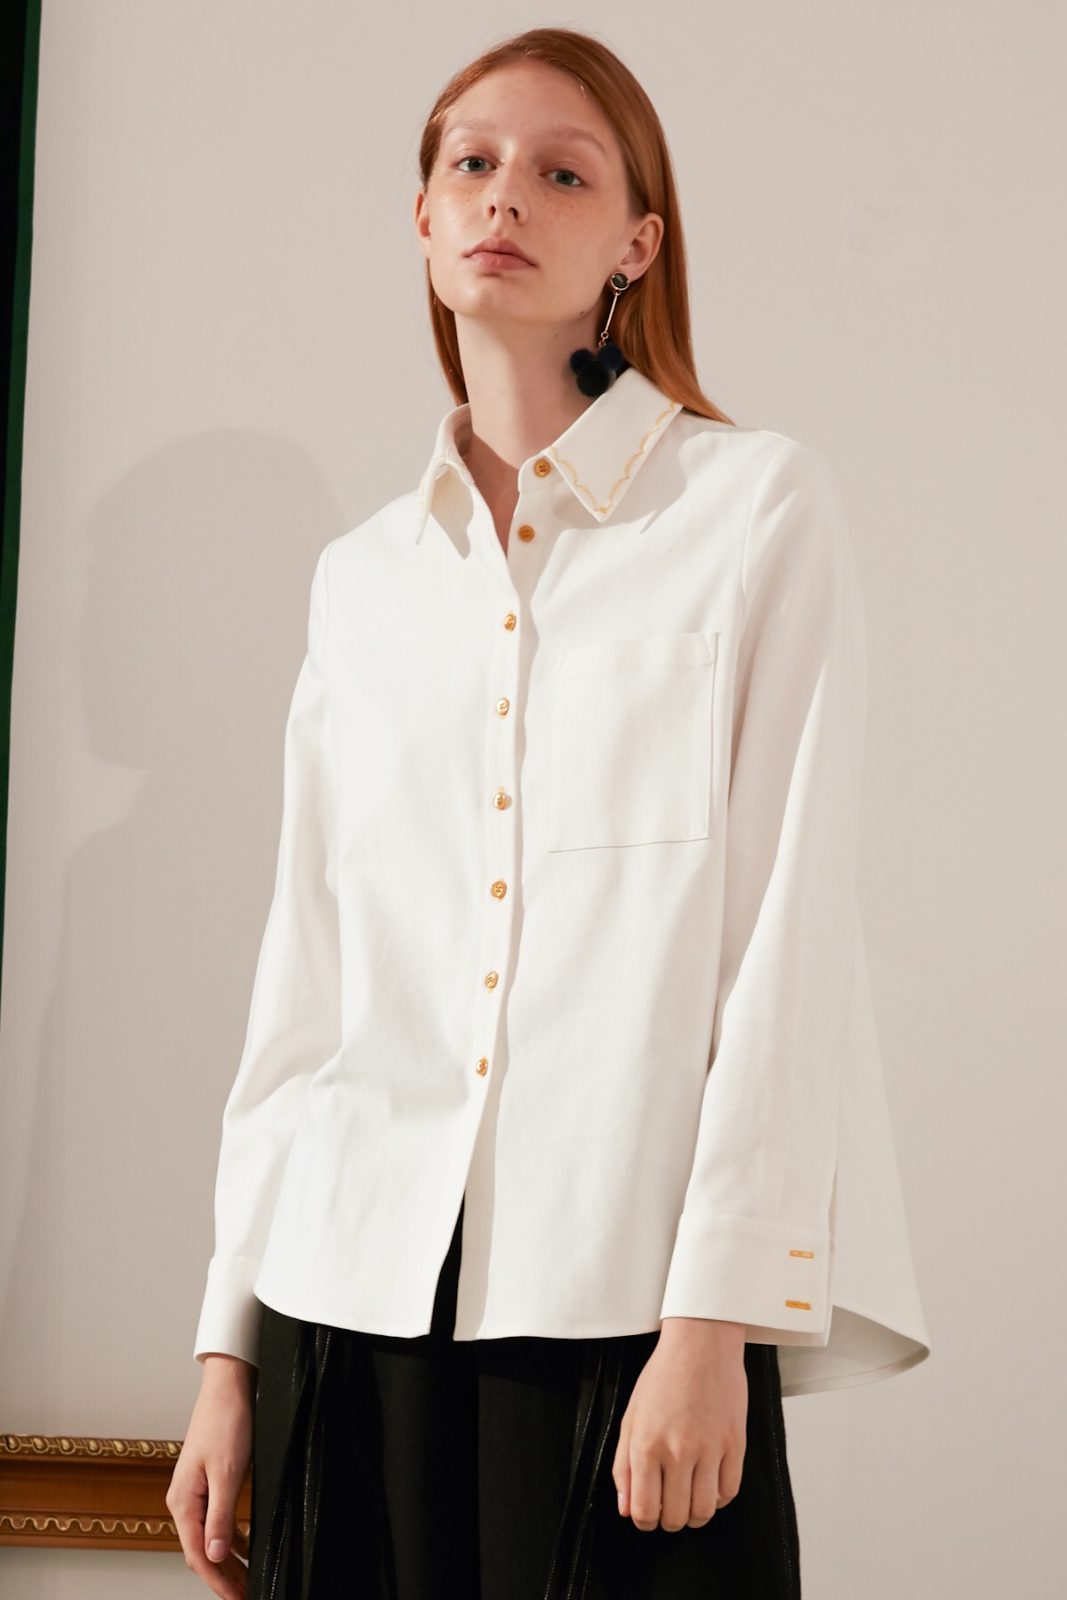 SKYE modern minimalist women fashion long sleeve shirt with gold embroidered collar white 3